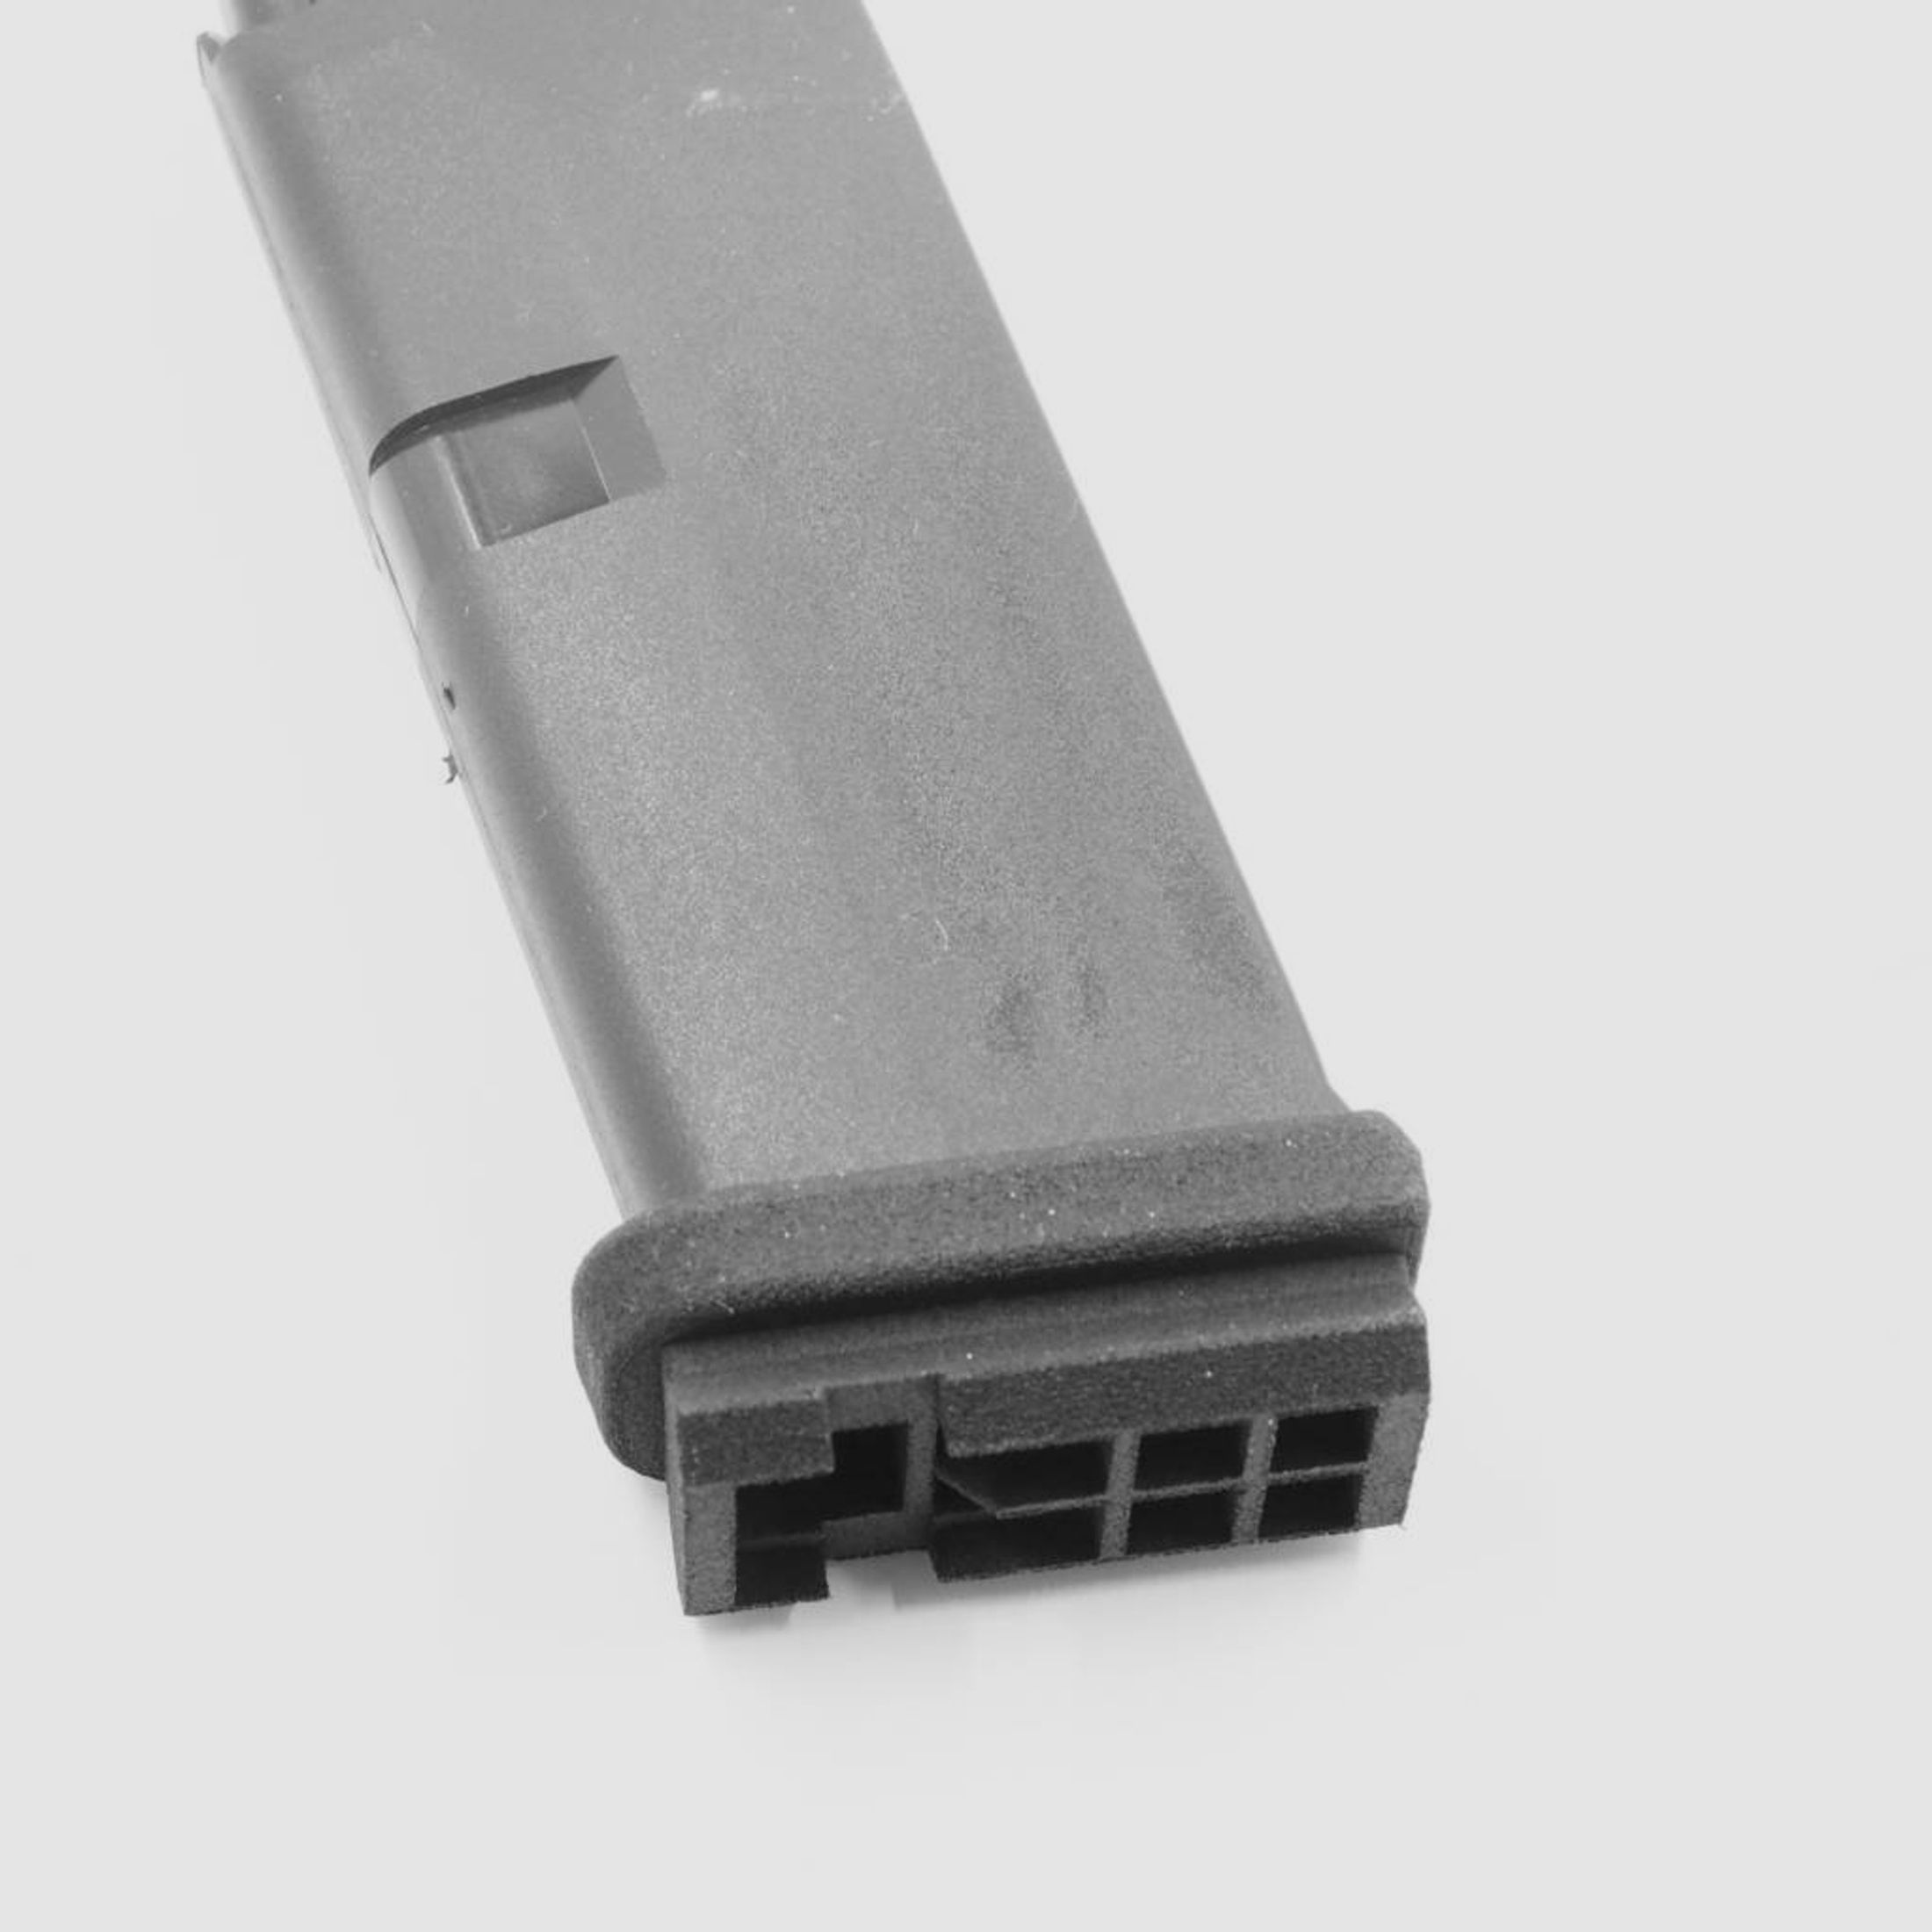 Magrail Magazin Adapter Glock 43